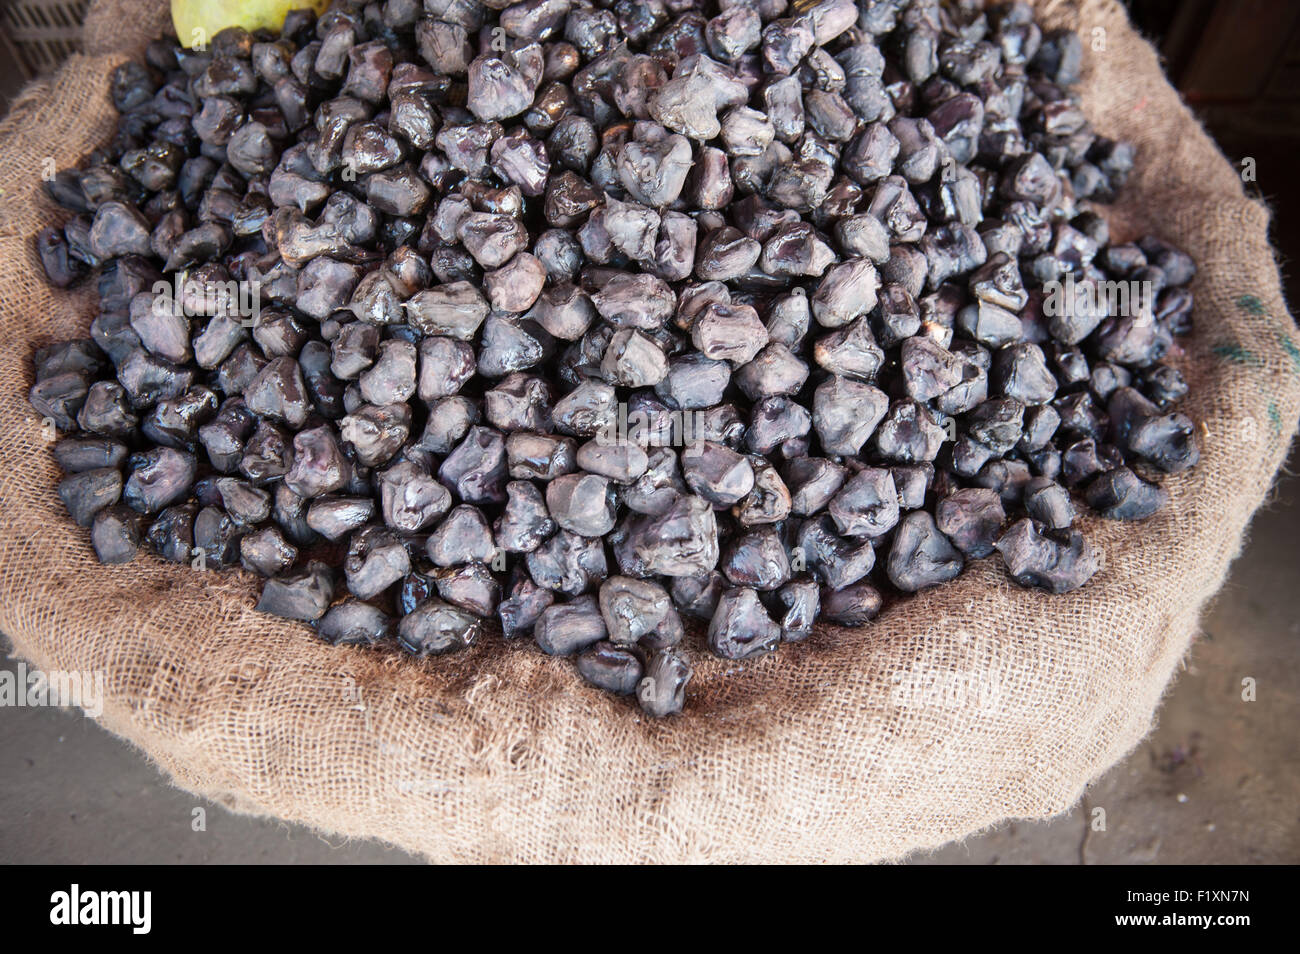 Amritsar, Punjab, India. Singhara - Indian name - black water chestnuts or water caltrop, of the genus Trapa. Known as Paniphal in Bangladesh. Stock Photo